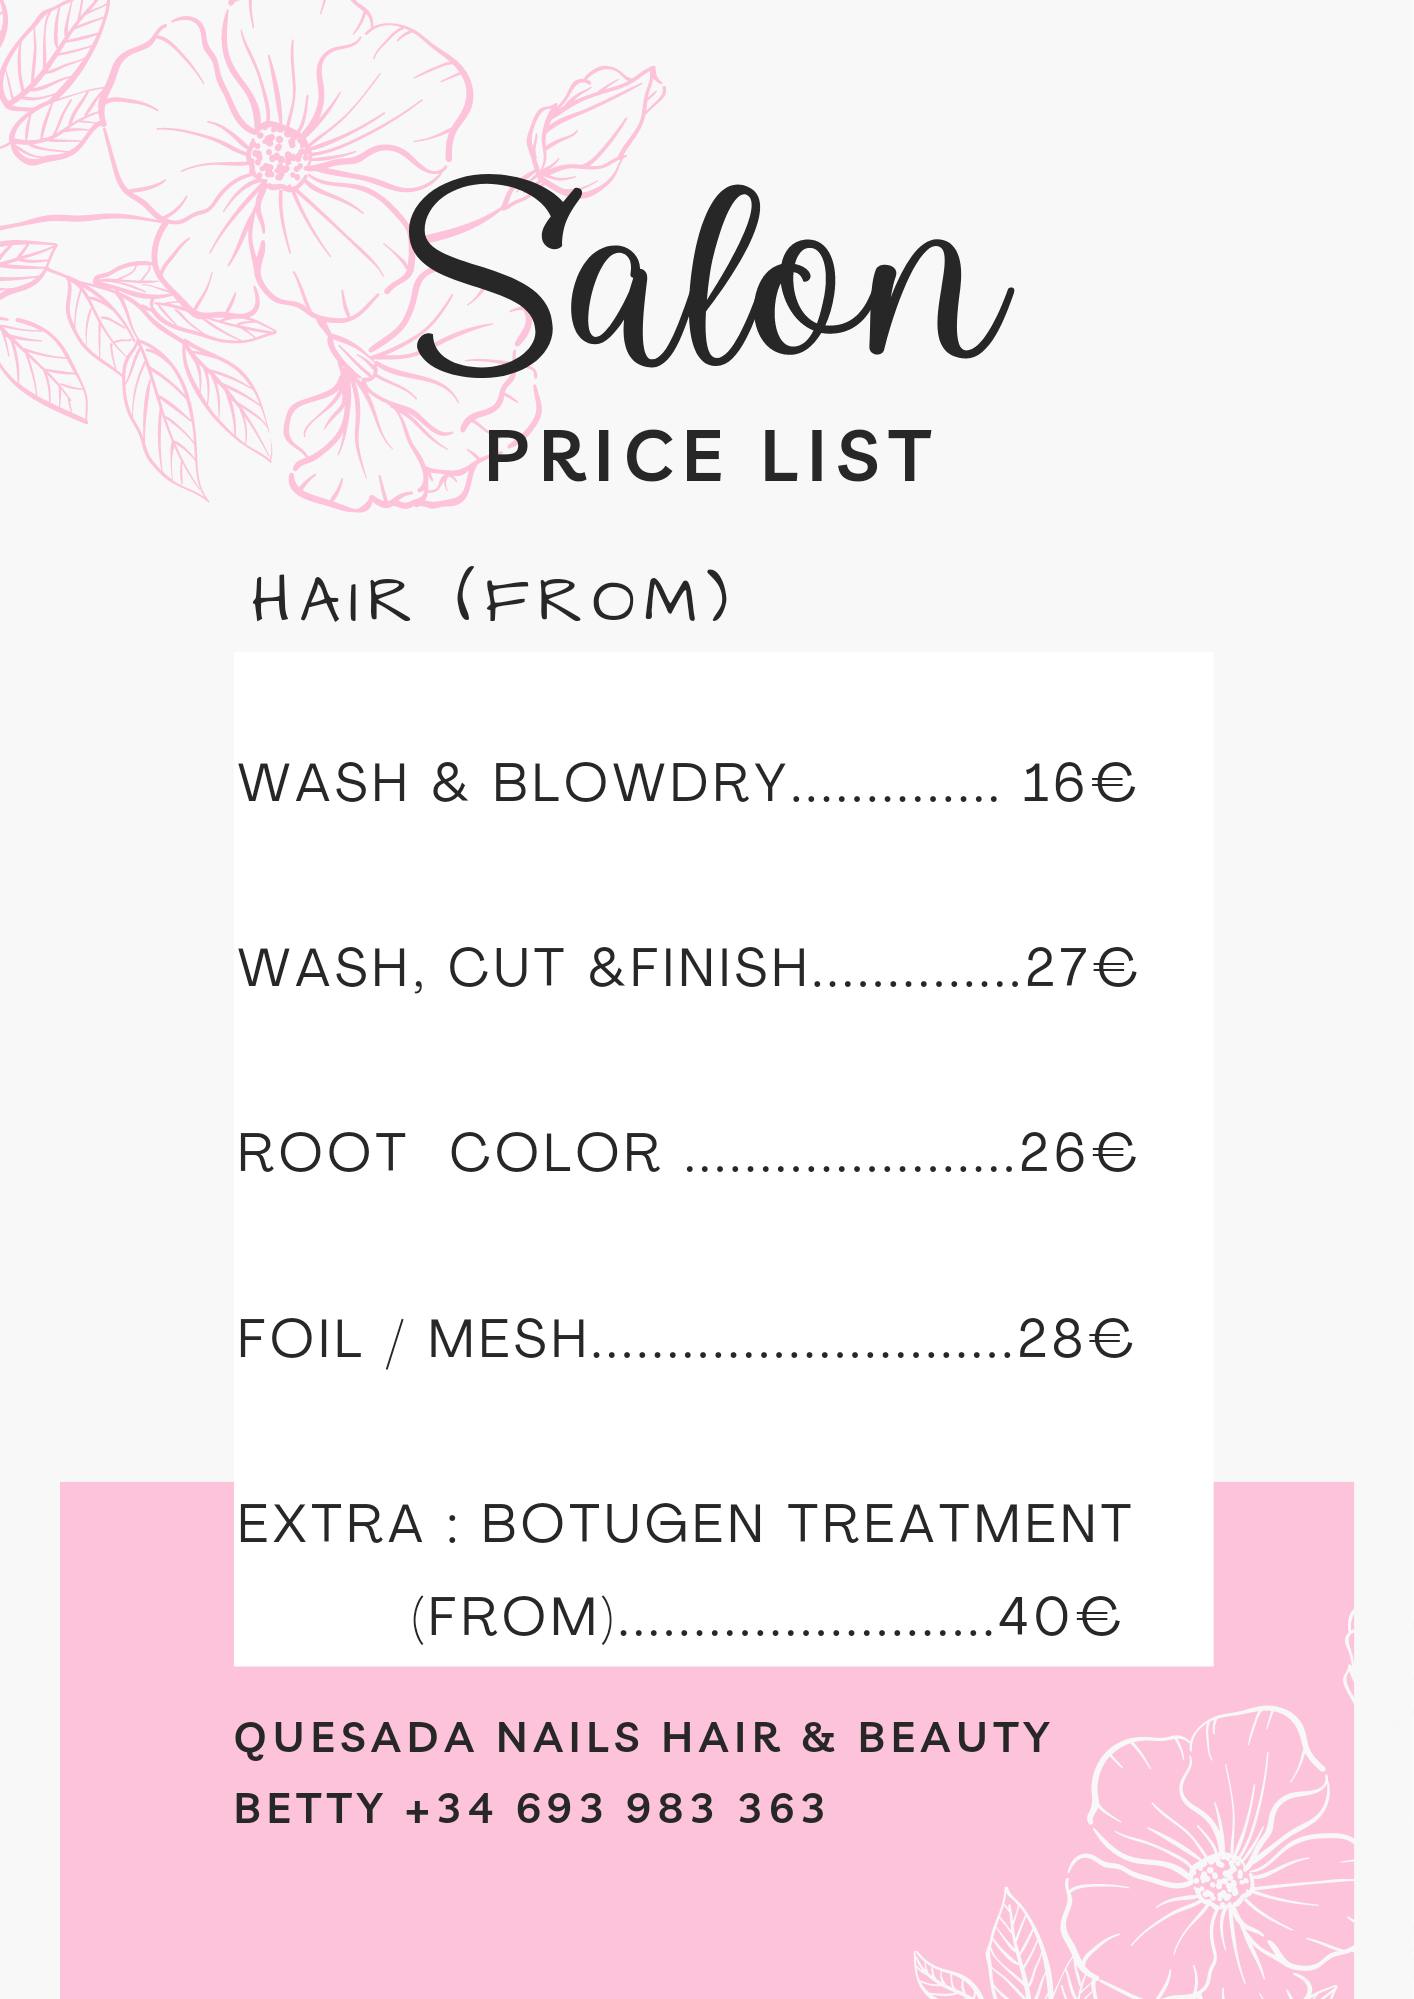 Price list hair salon Quesada Nails Hair & Beauty